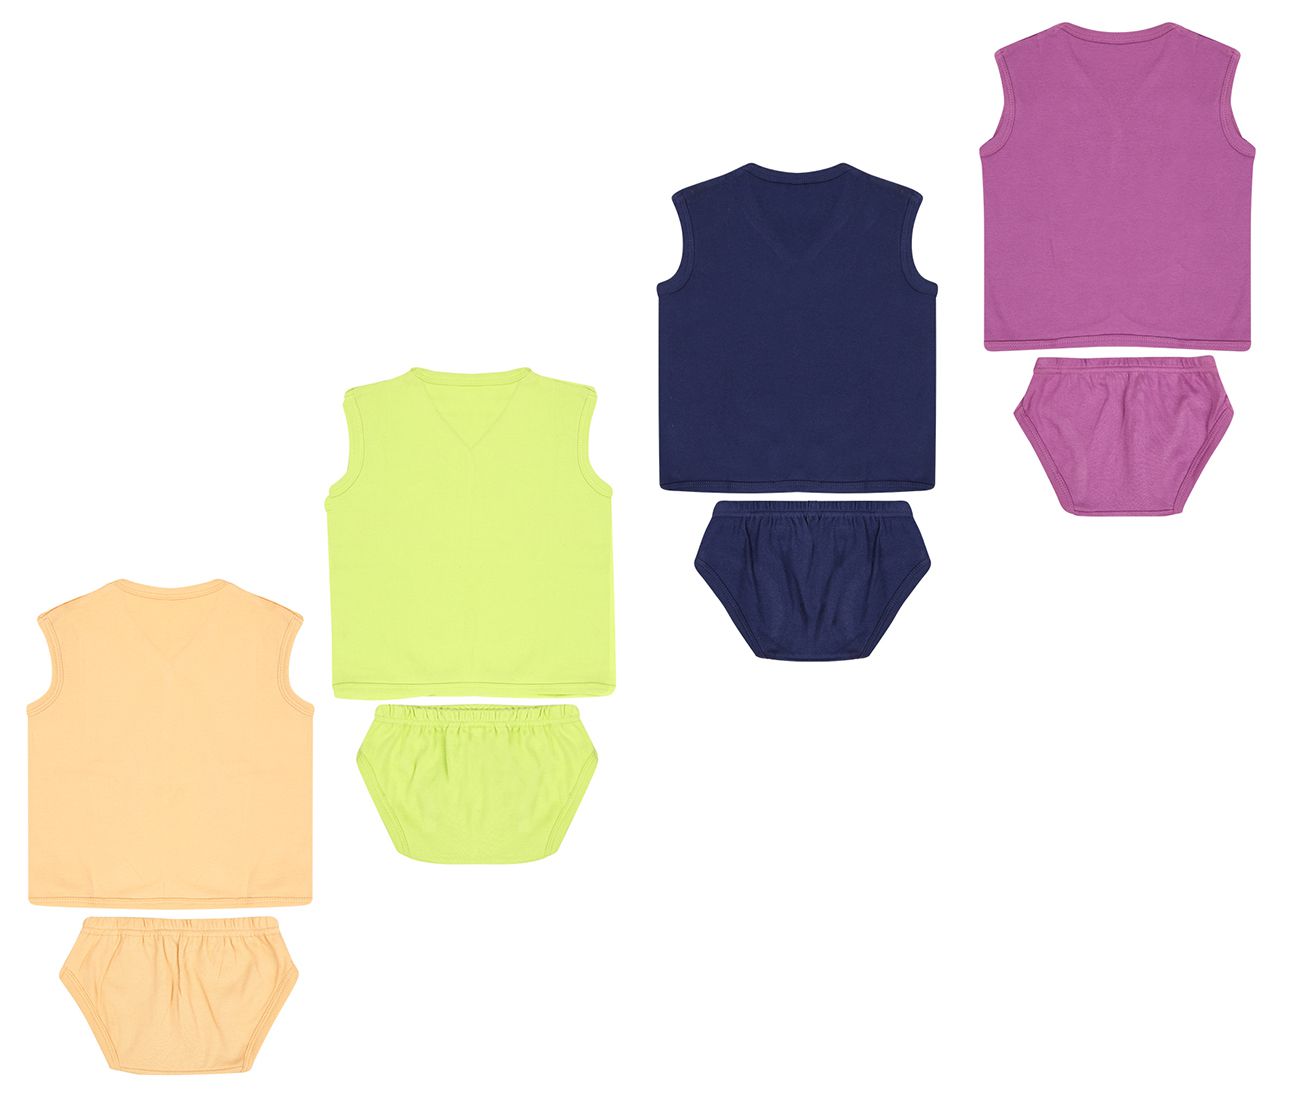     			Dongli Unisex Soft Cotton Baby Set Dress (Pack of 4)